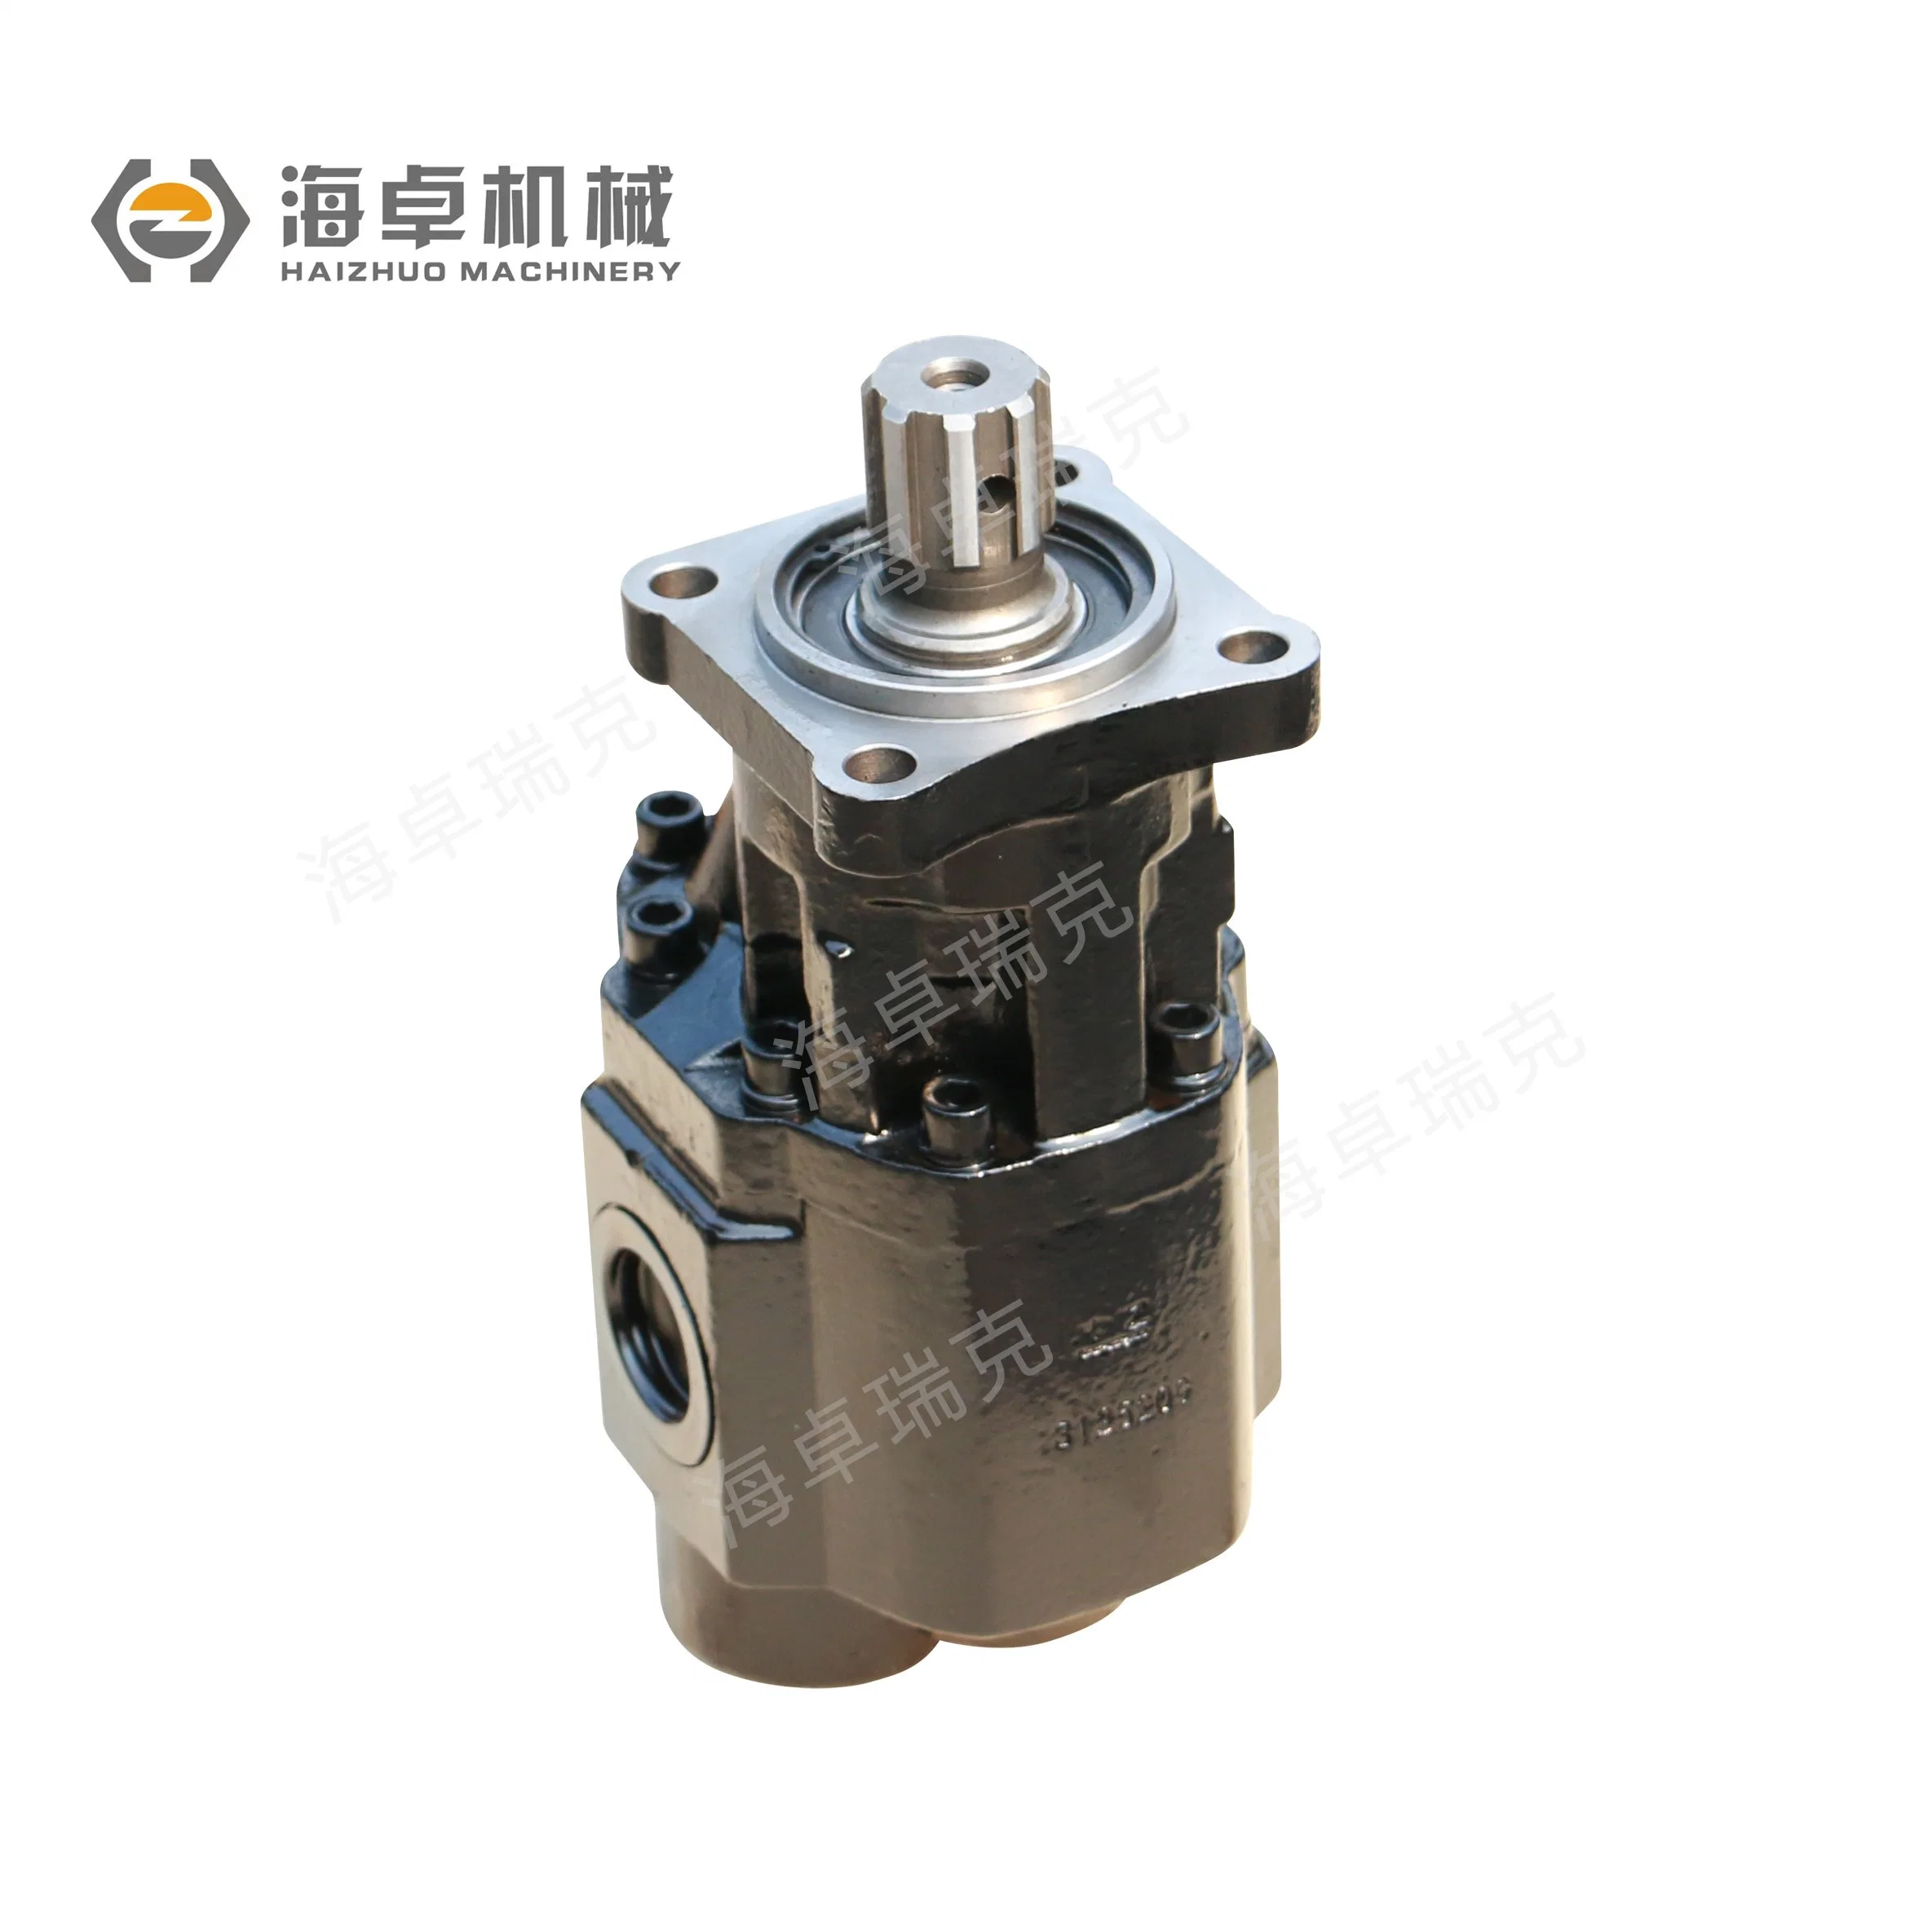 China Supplier Cbl80/100cc Fixed Displacement High Pressure Hydraulic Oil Gear Pump for Tipper Dump Truck Alternative for Hyva